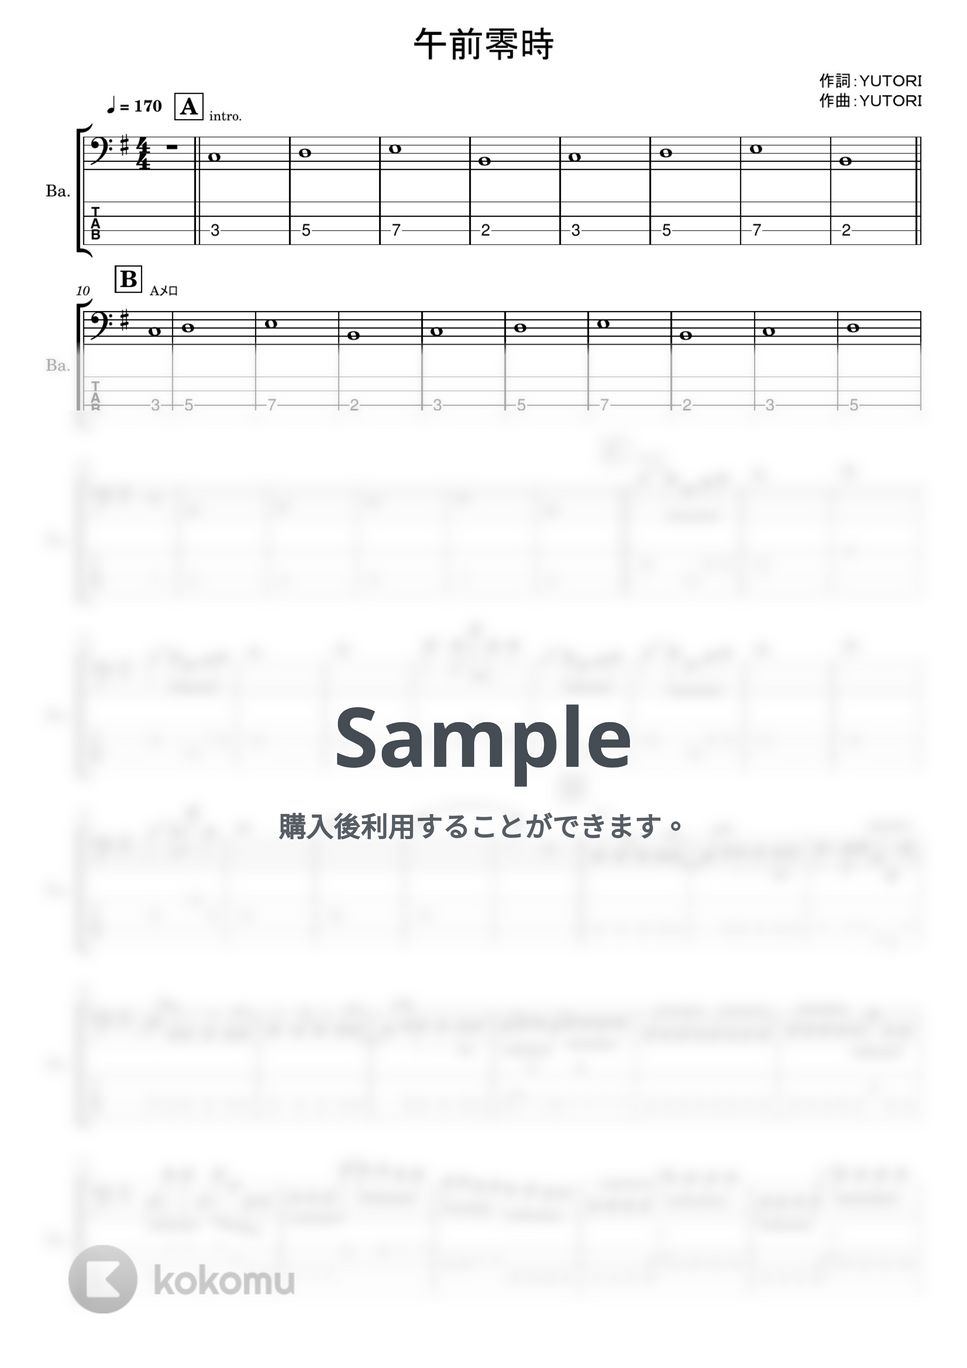 yutori - 午前零時 (ベースTAB譜) by やまさんルーム